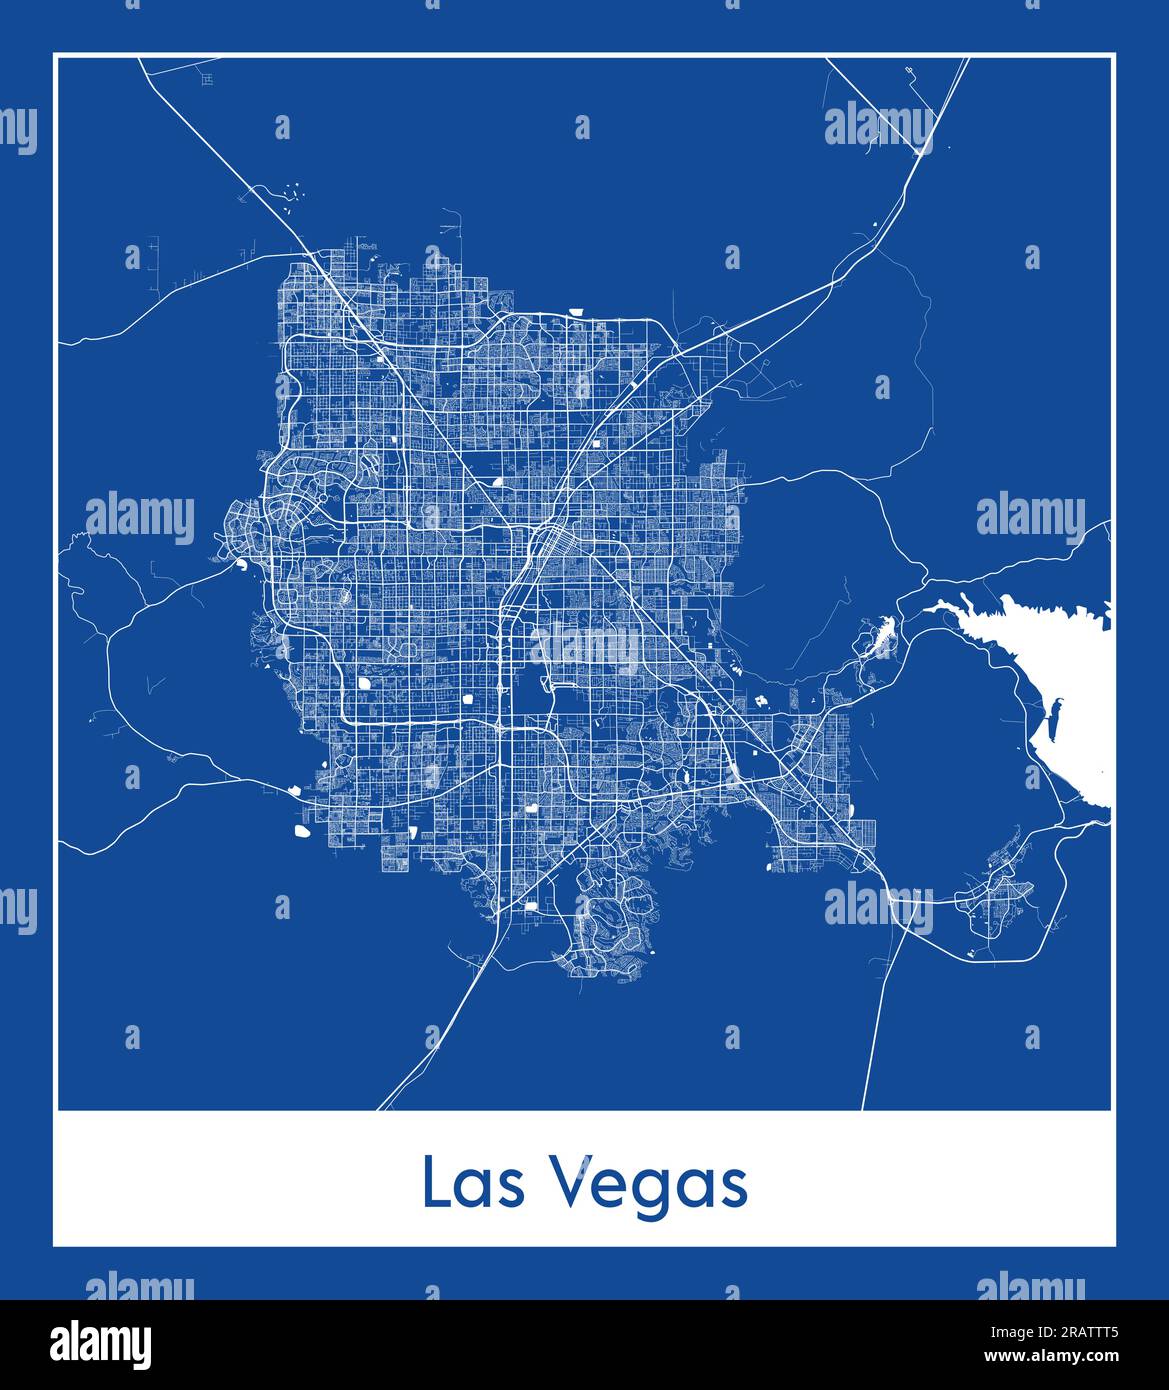 Las Vegas United States North America City Karte blau gedruckt Vektordarstellung Stock Vektor